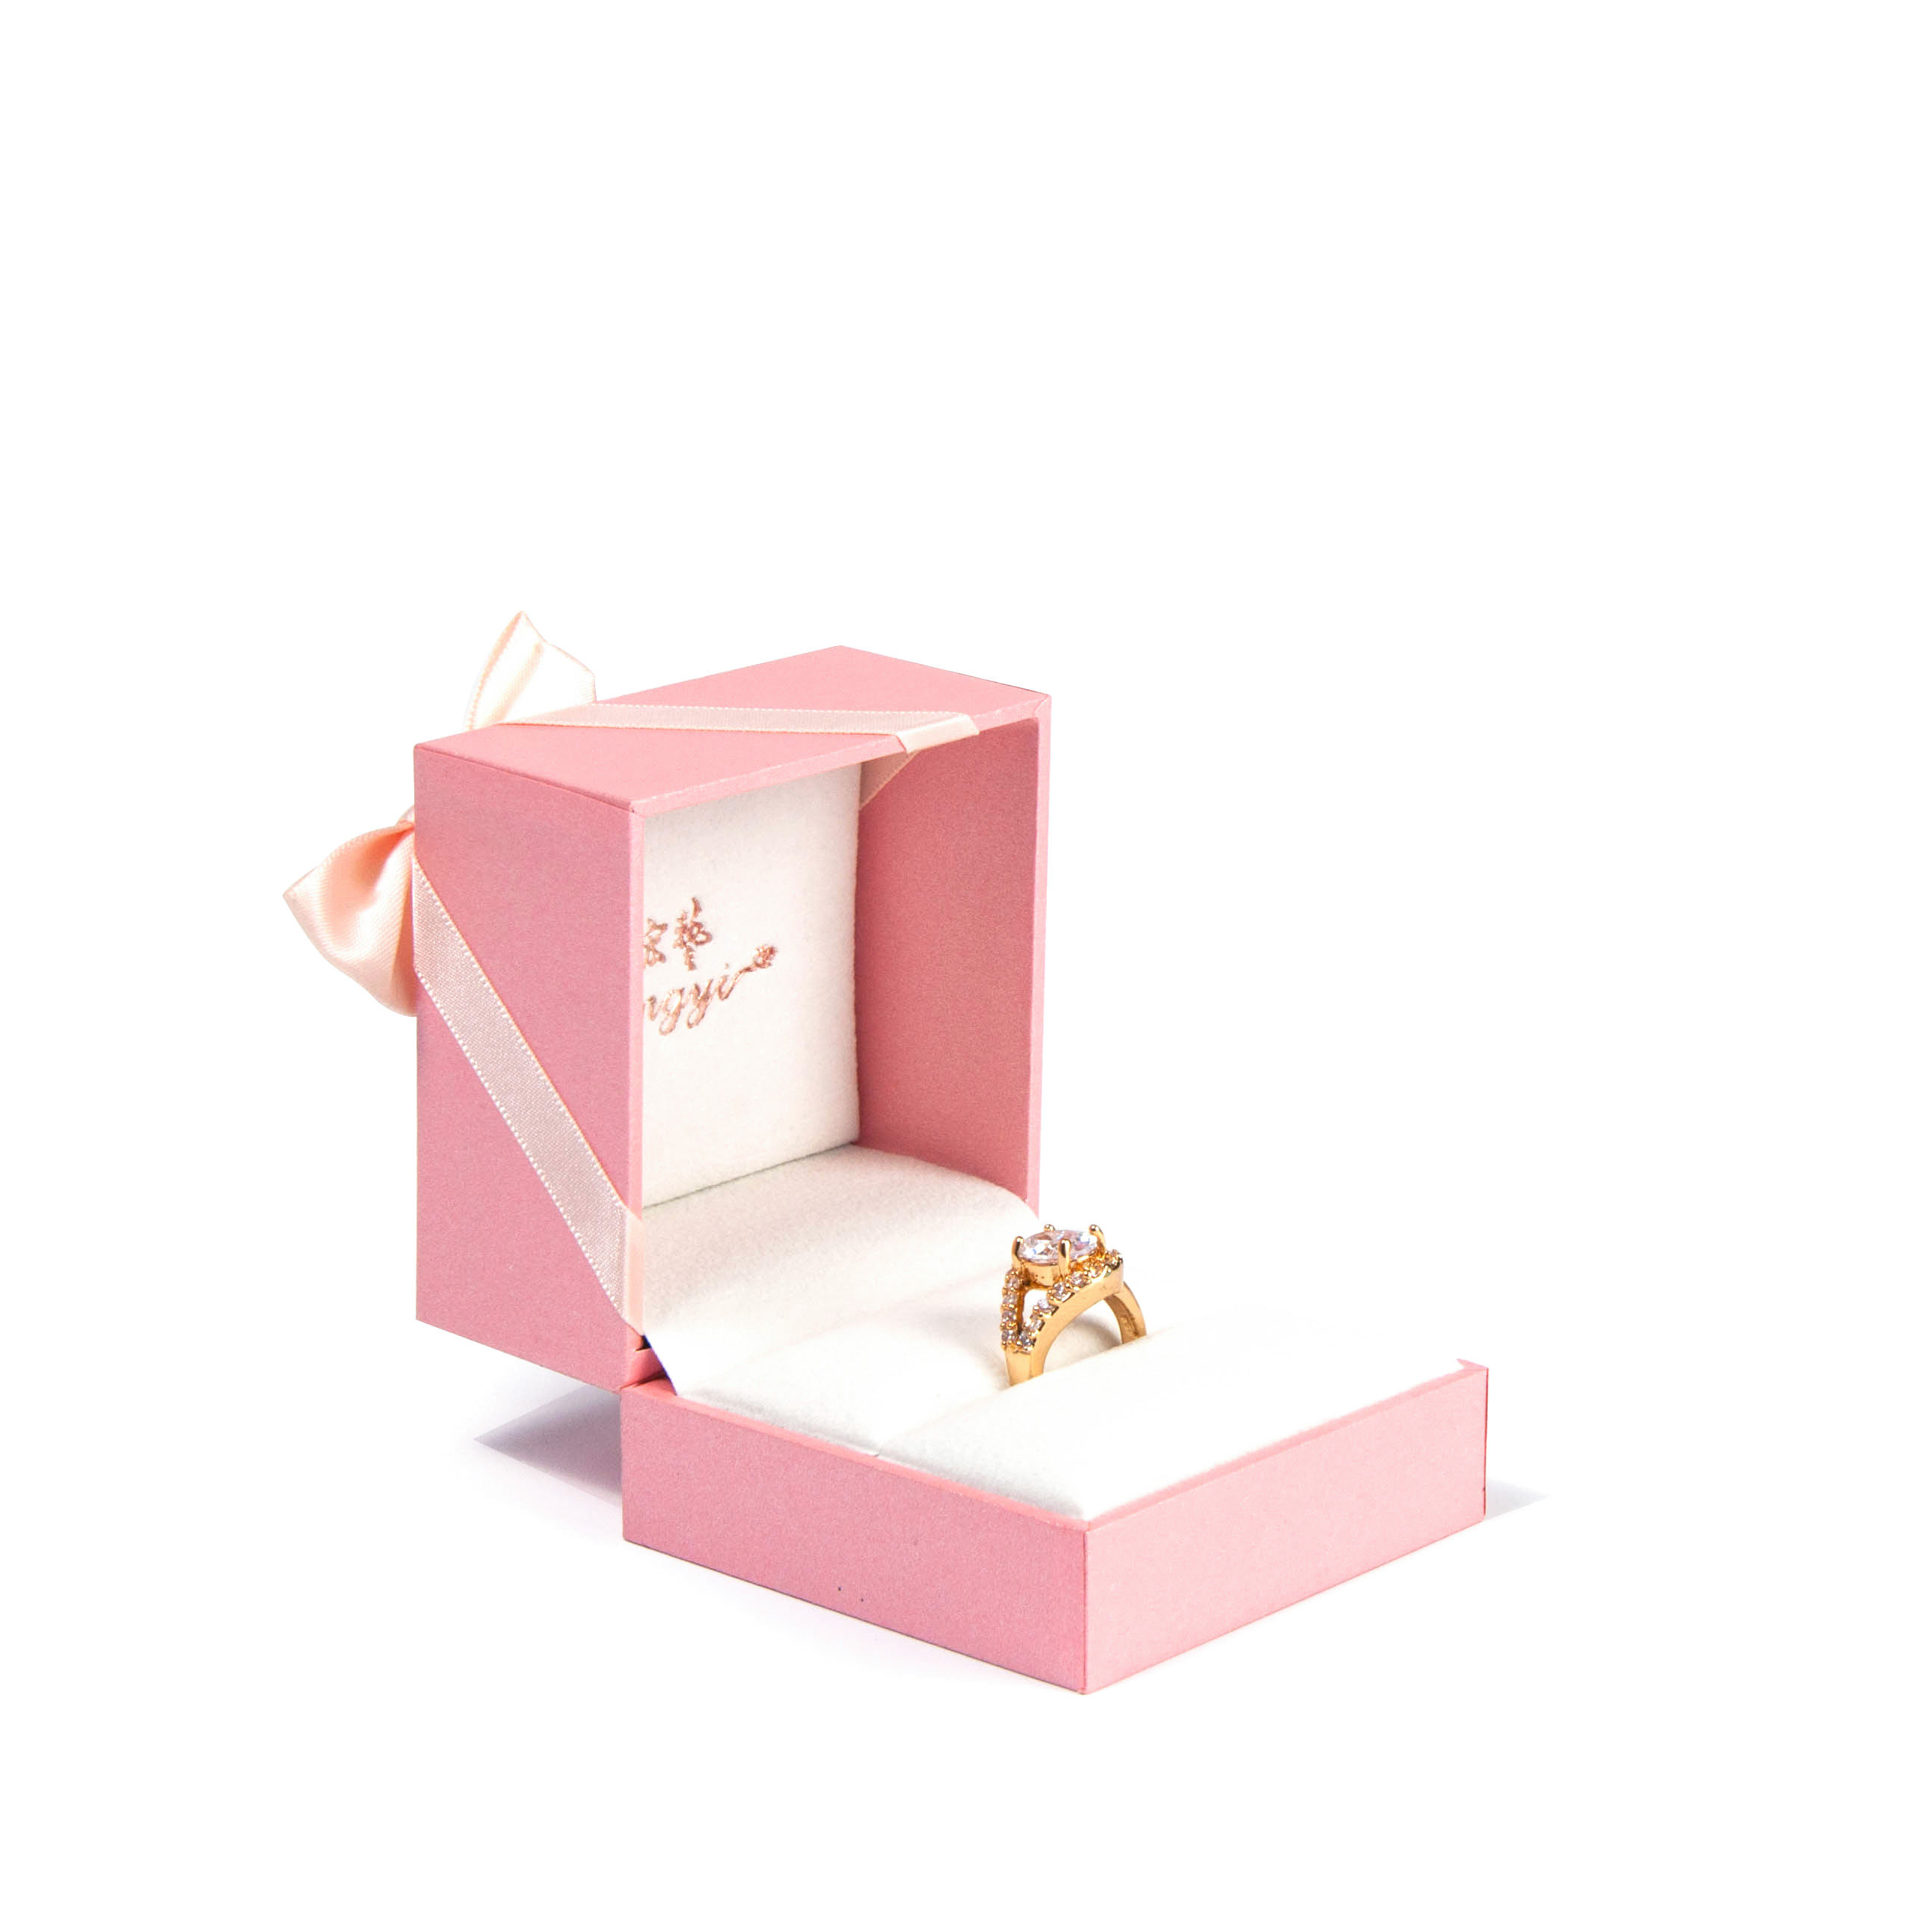 Yadao Προσαρμοσμένη ροζ άνοιξη μεντεσέ για κοσμήματα κουτί αποθήκευσης